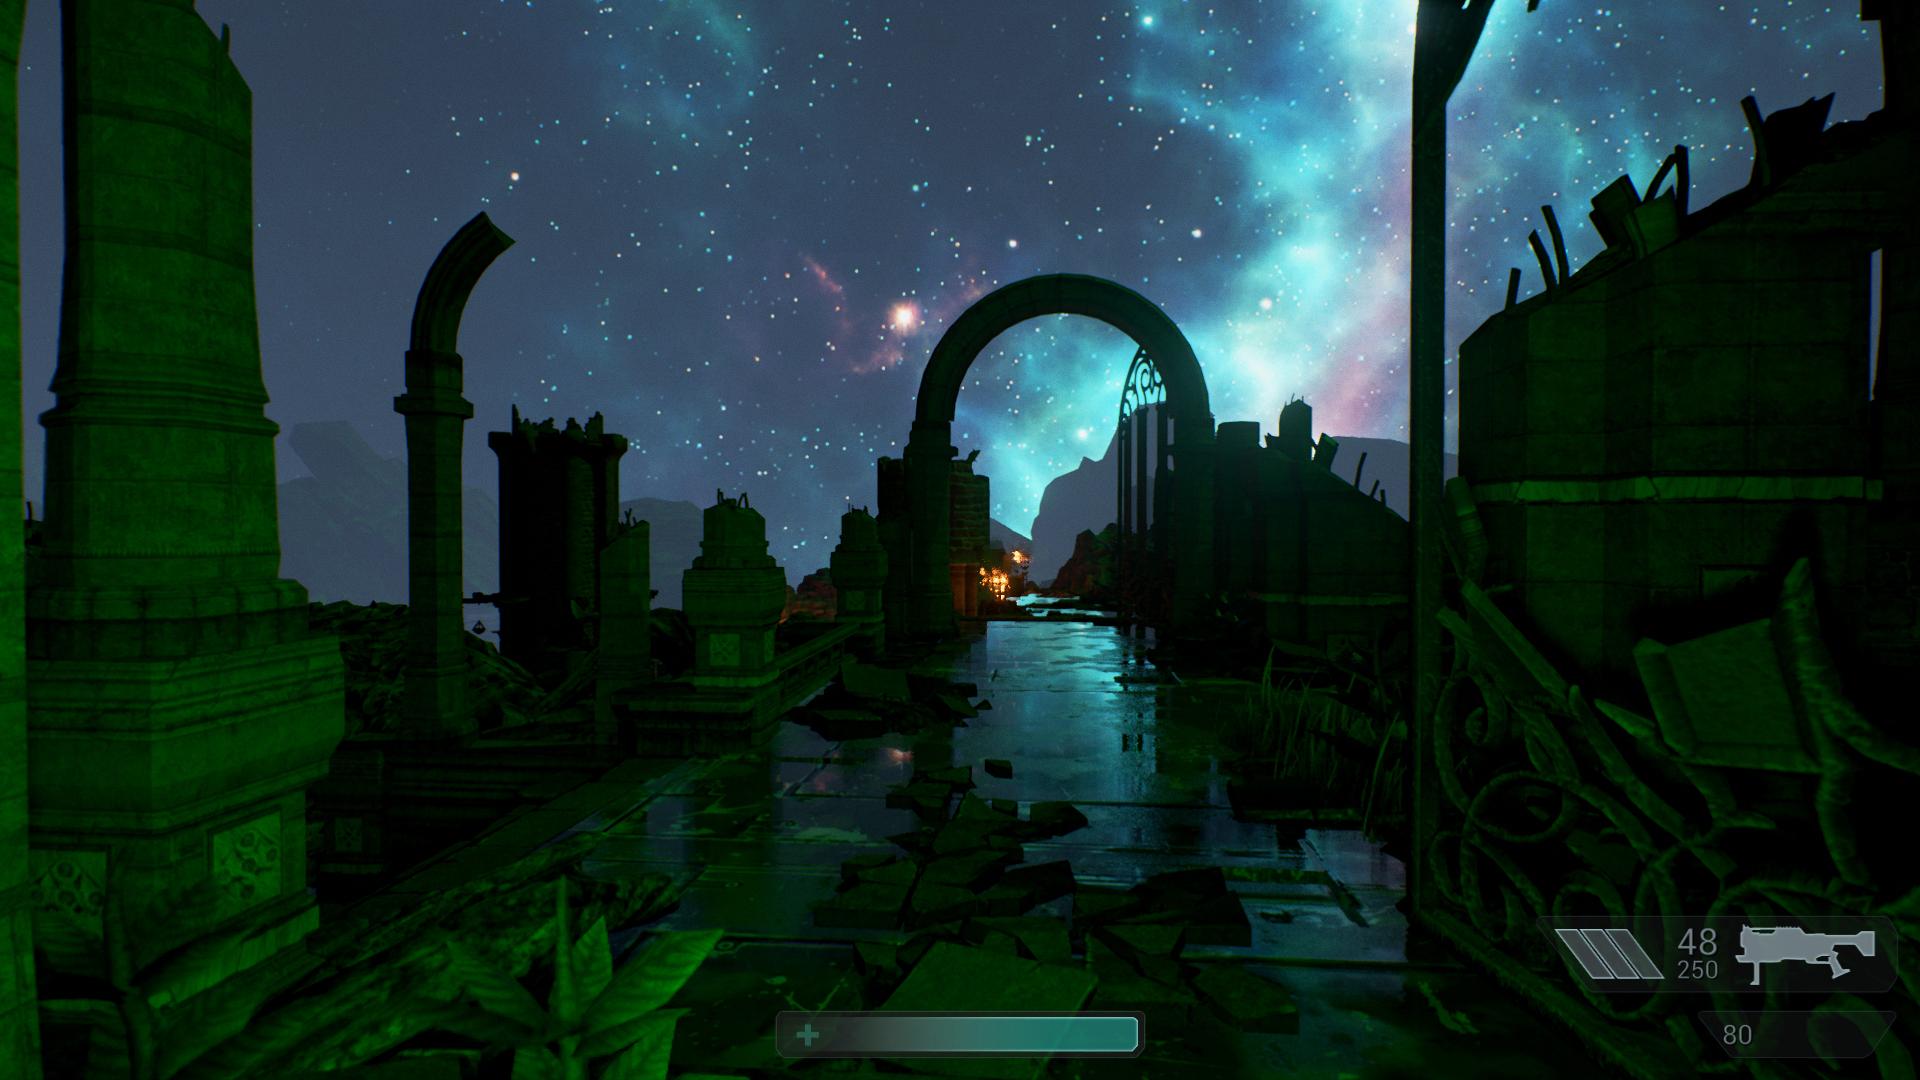 Screenshot №3 from game X-17